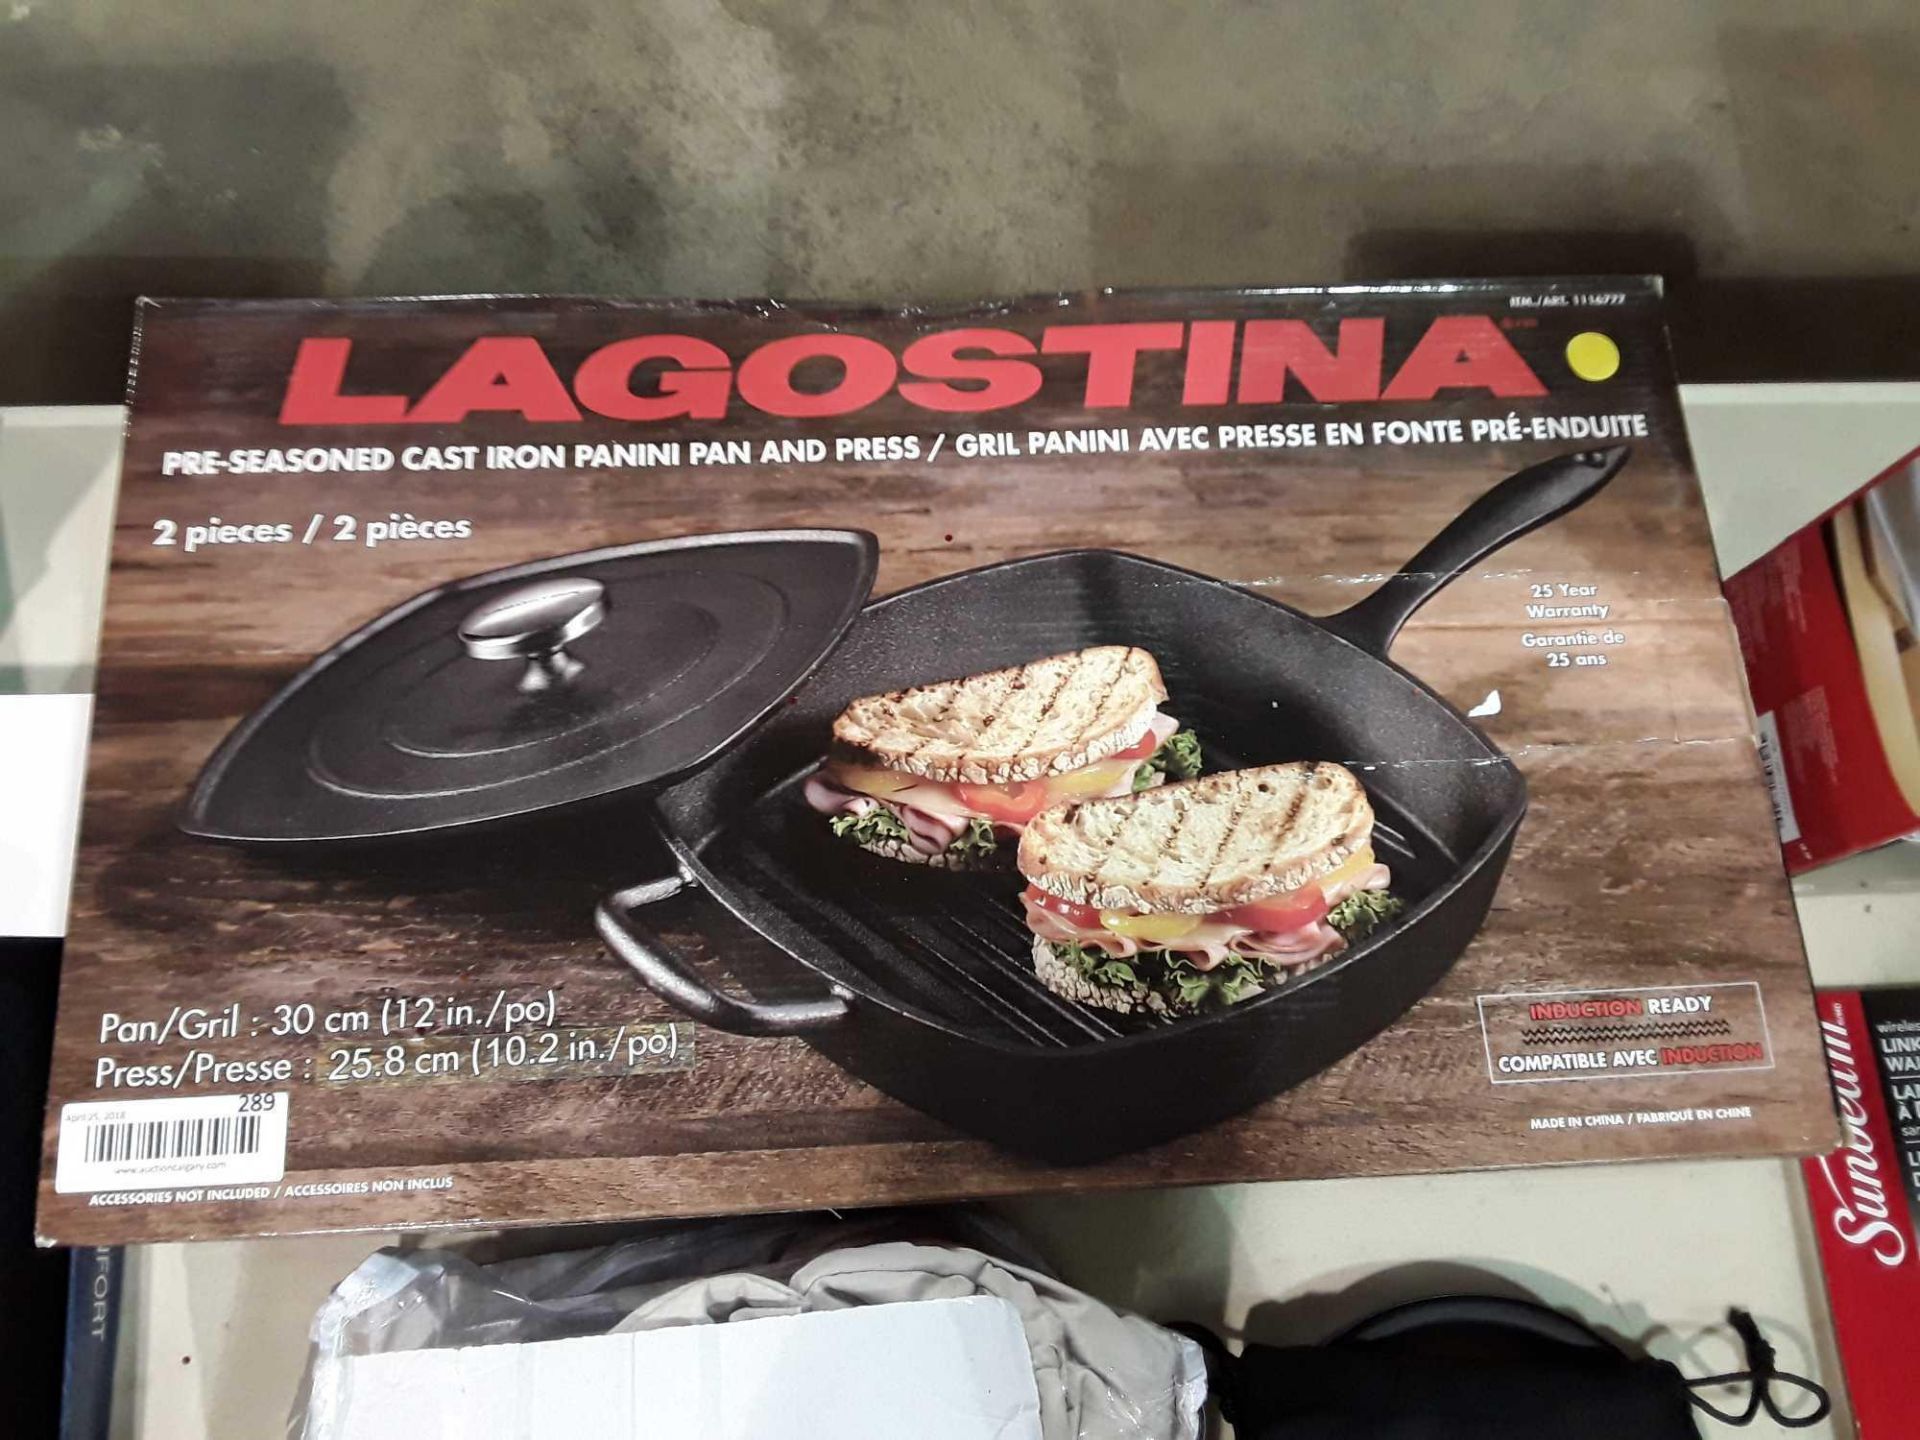 Lagostina pre-seasoned cast iron panini pan and press grill.